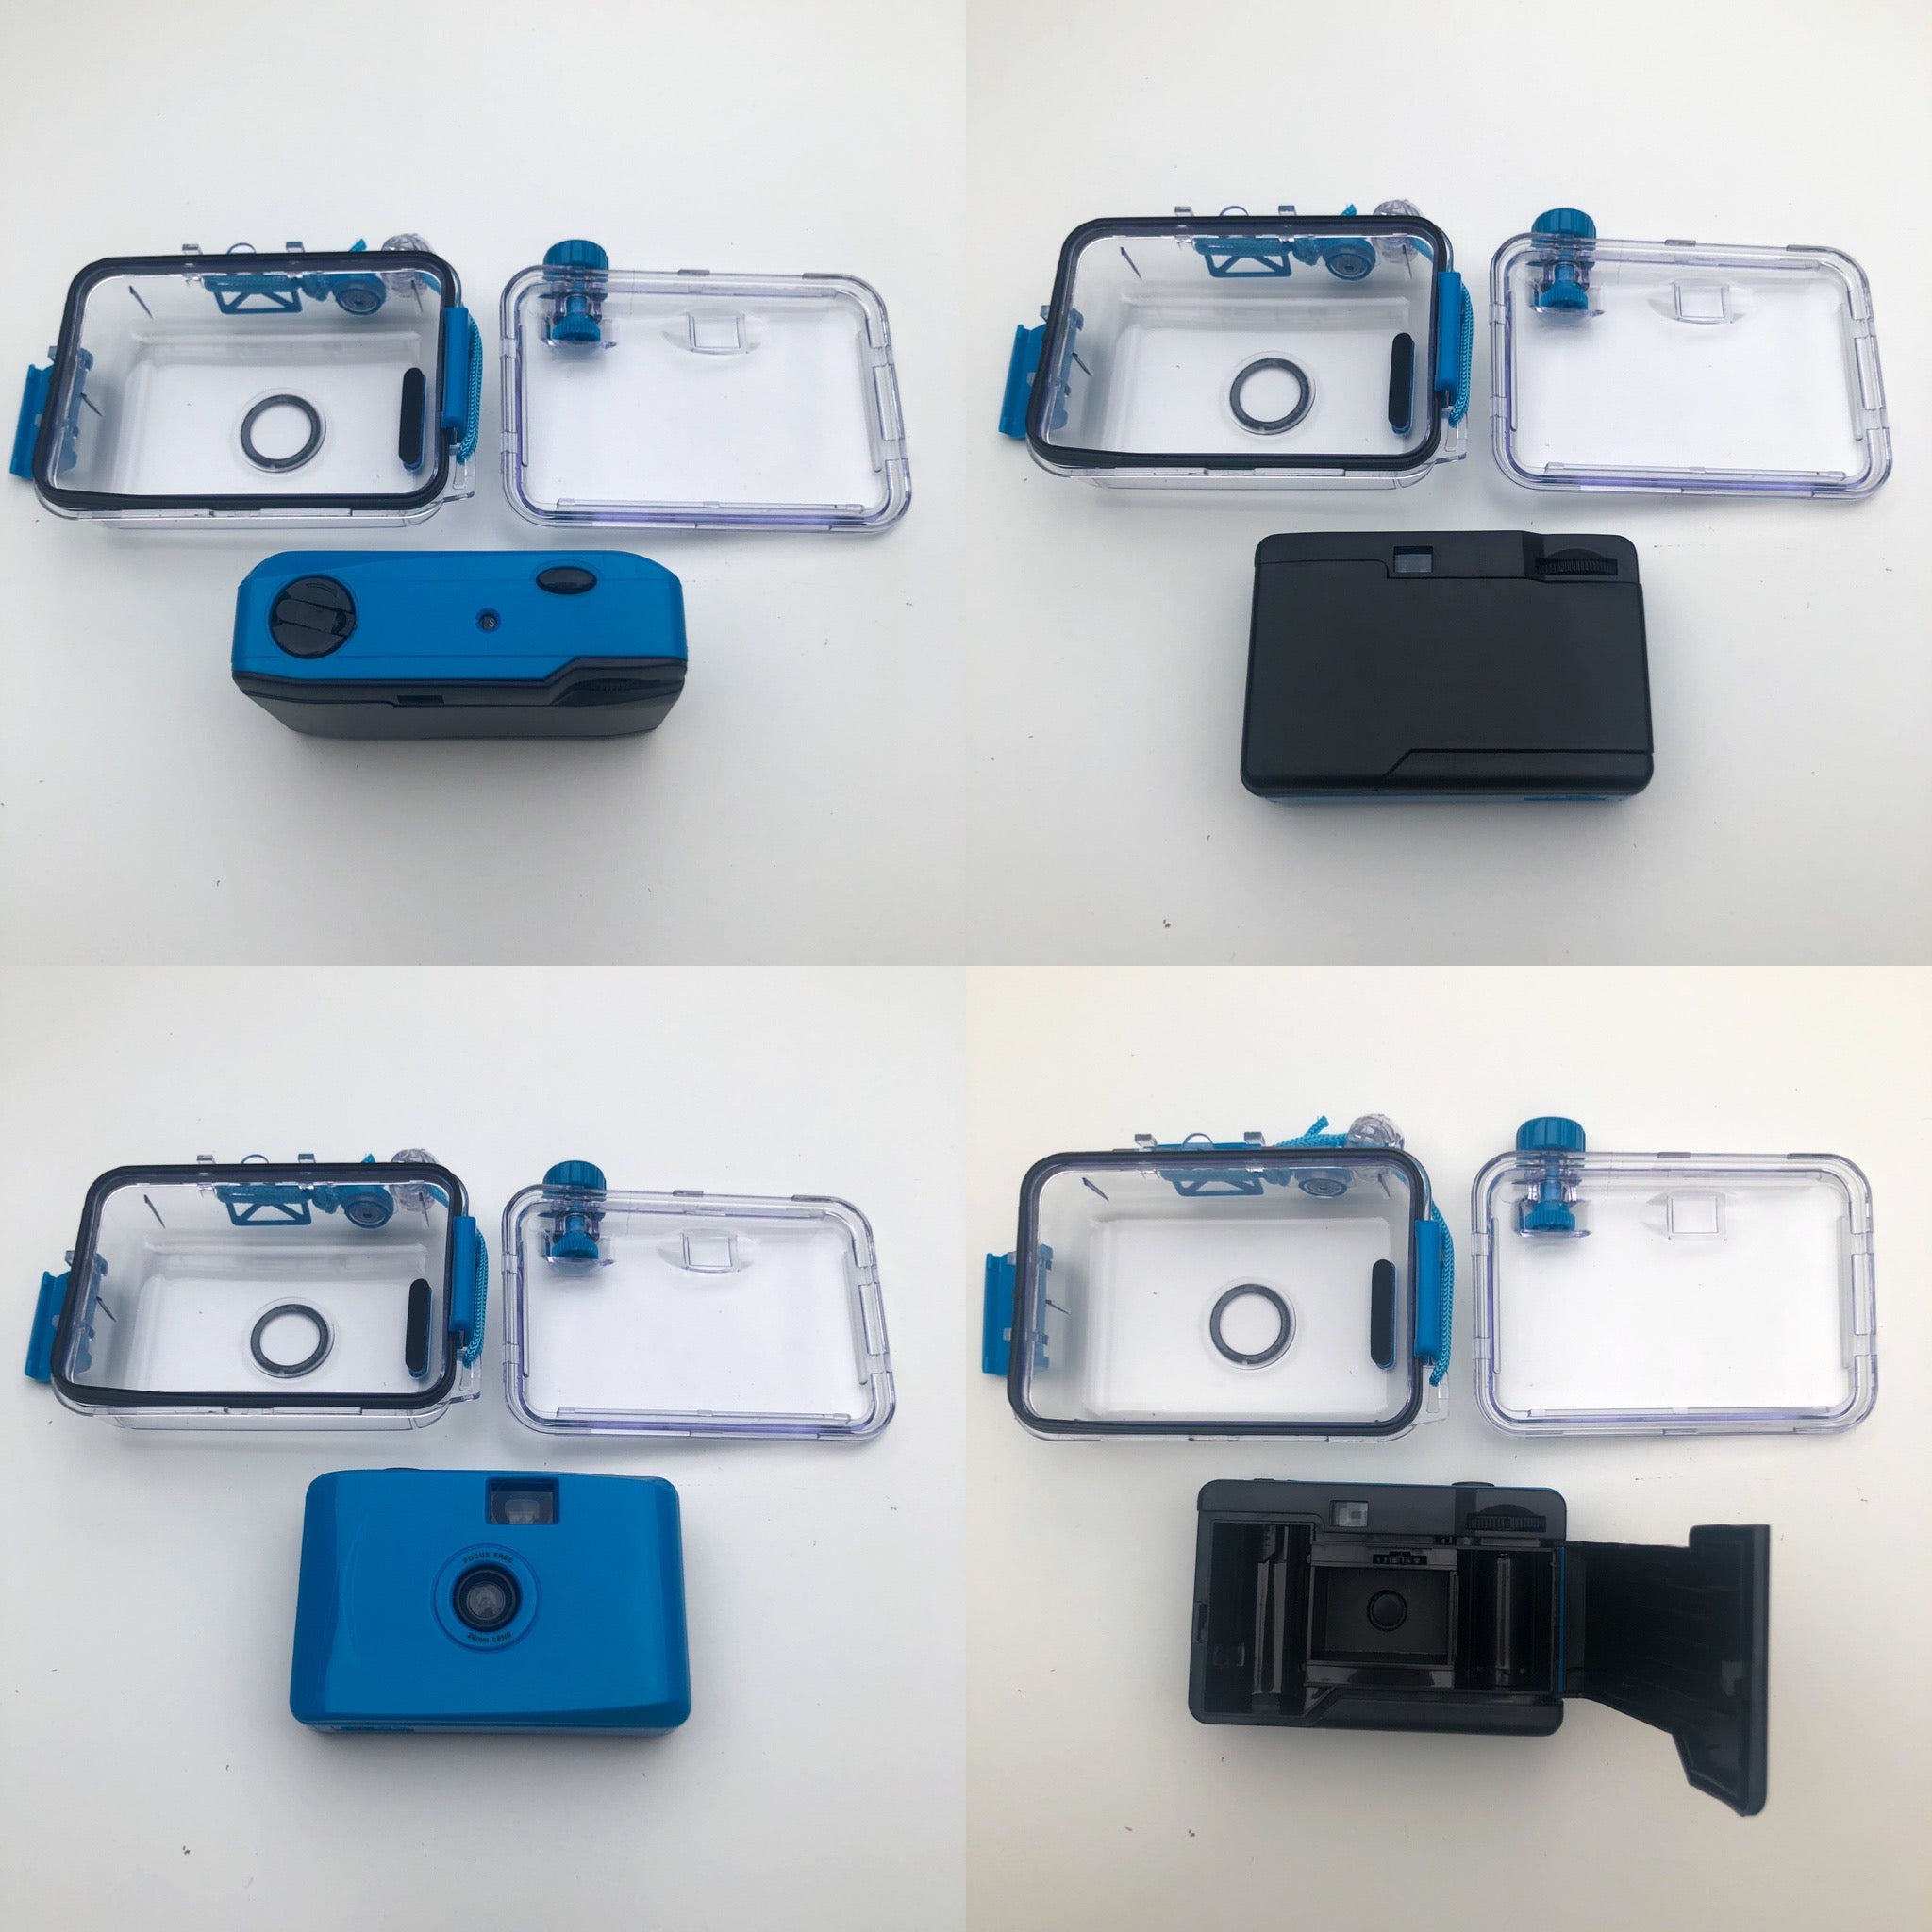 Waterproof Reusable 35mm Film Camera - ShutterUp Film